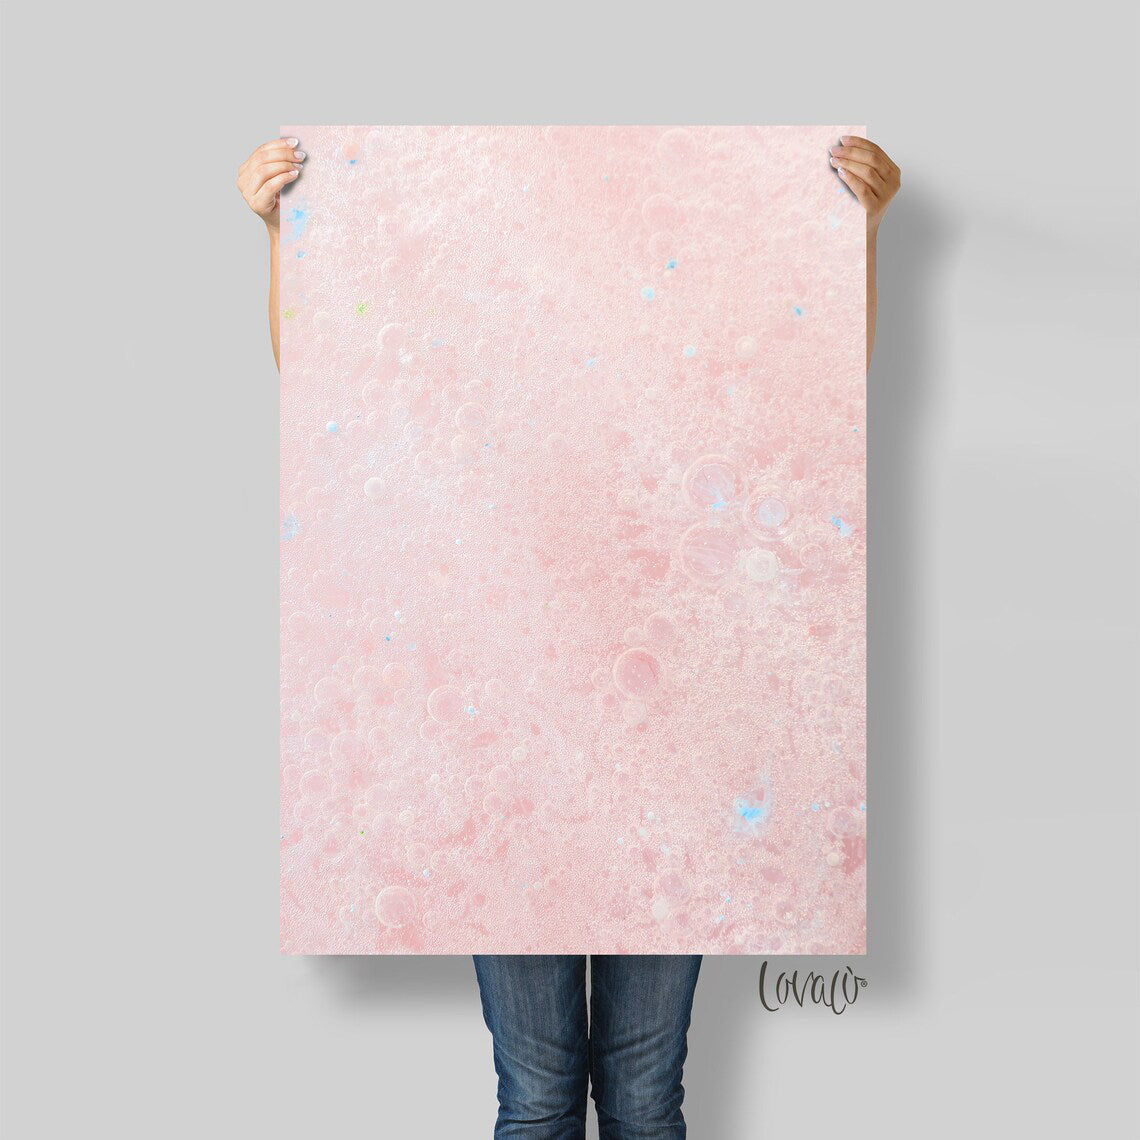 Photography Backdrop pink tiles - Lov3101